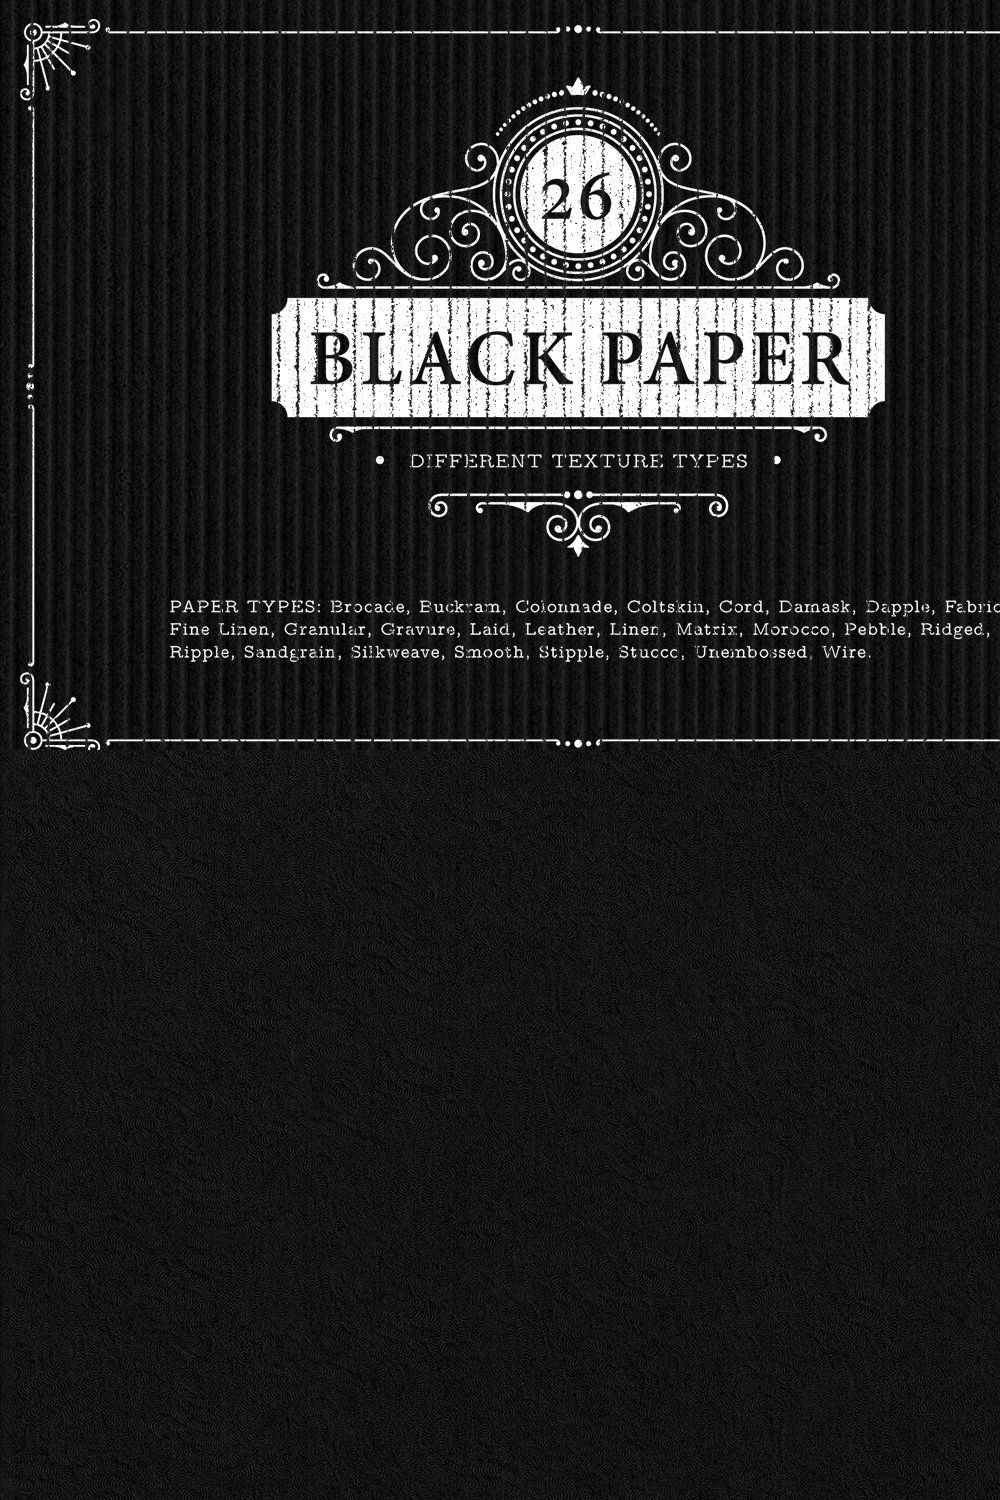 26 Black Paper Texture Backgrounds pinterest preview image.